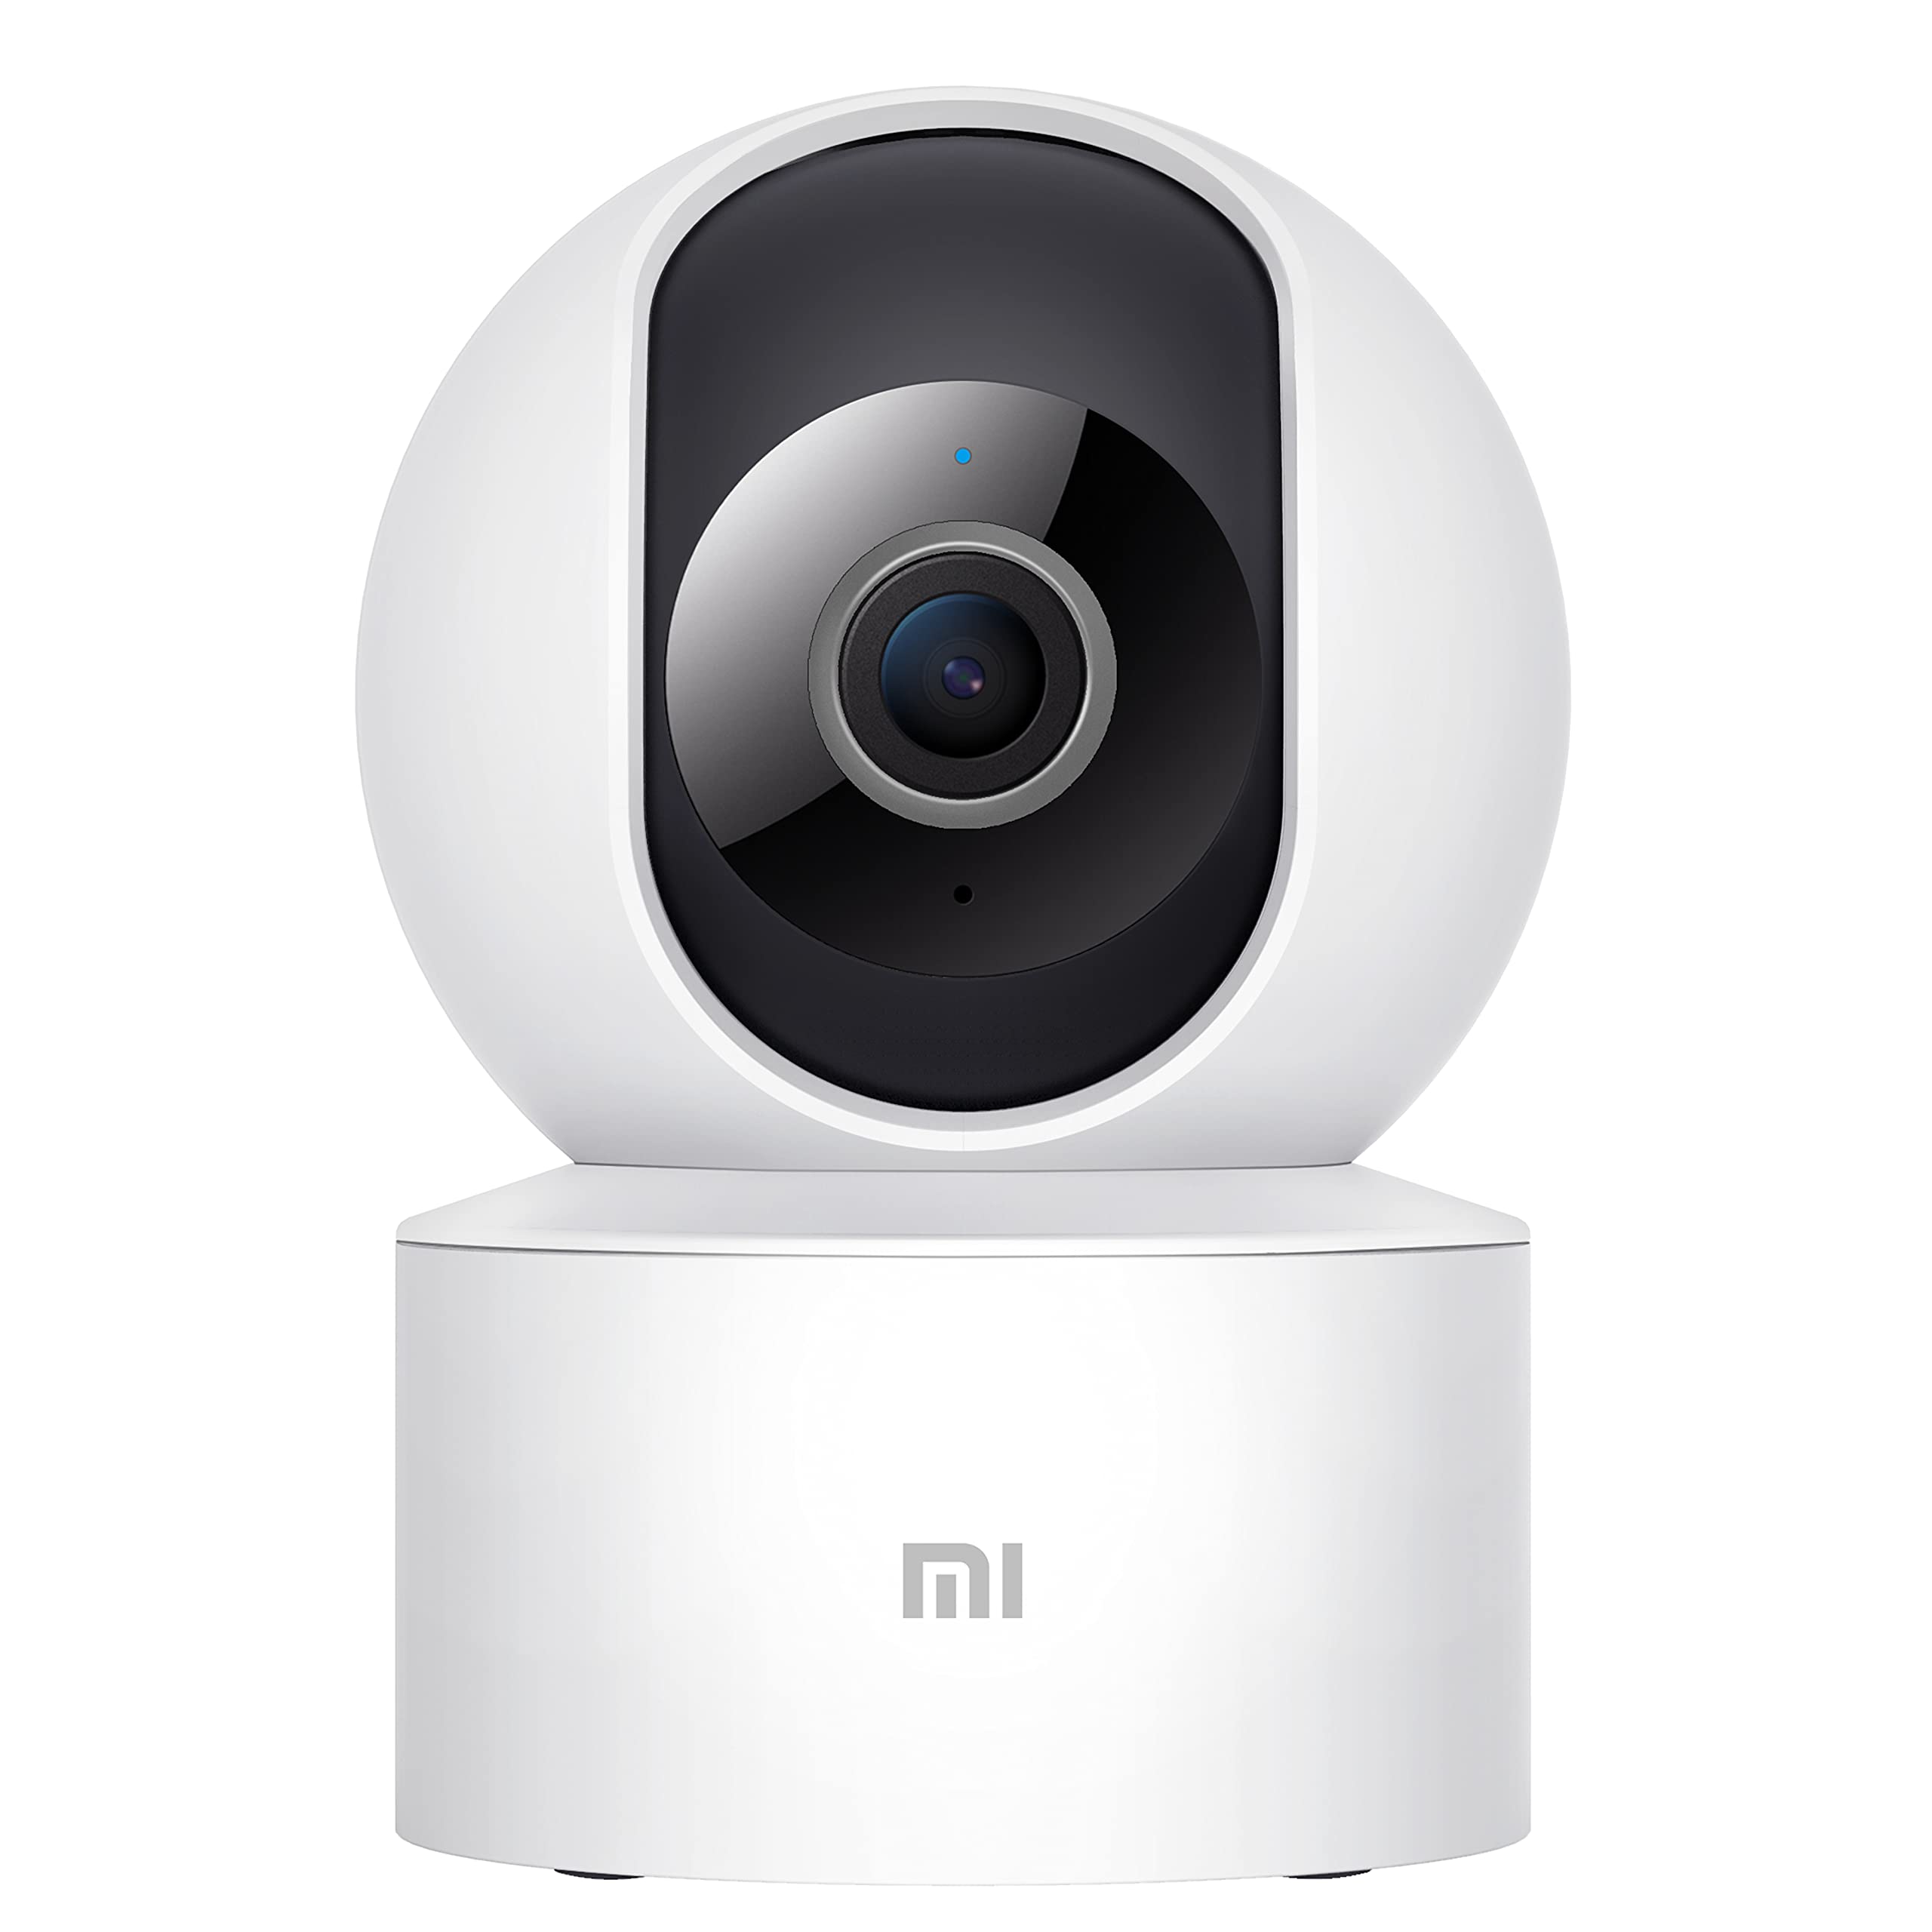 Xiaomi Mi Home Security Camera 360 Degree 1080P White, Mjsxj05cm, - White كاميرا المراقبة المنزلية ب360 درجة من شاومي مي، ابيض